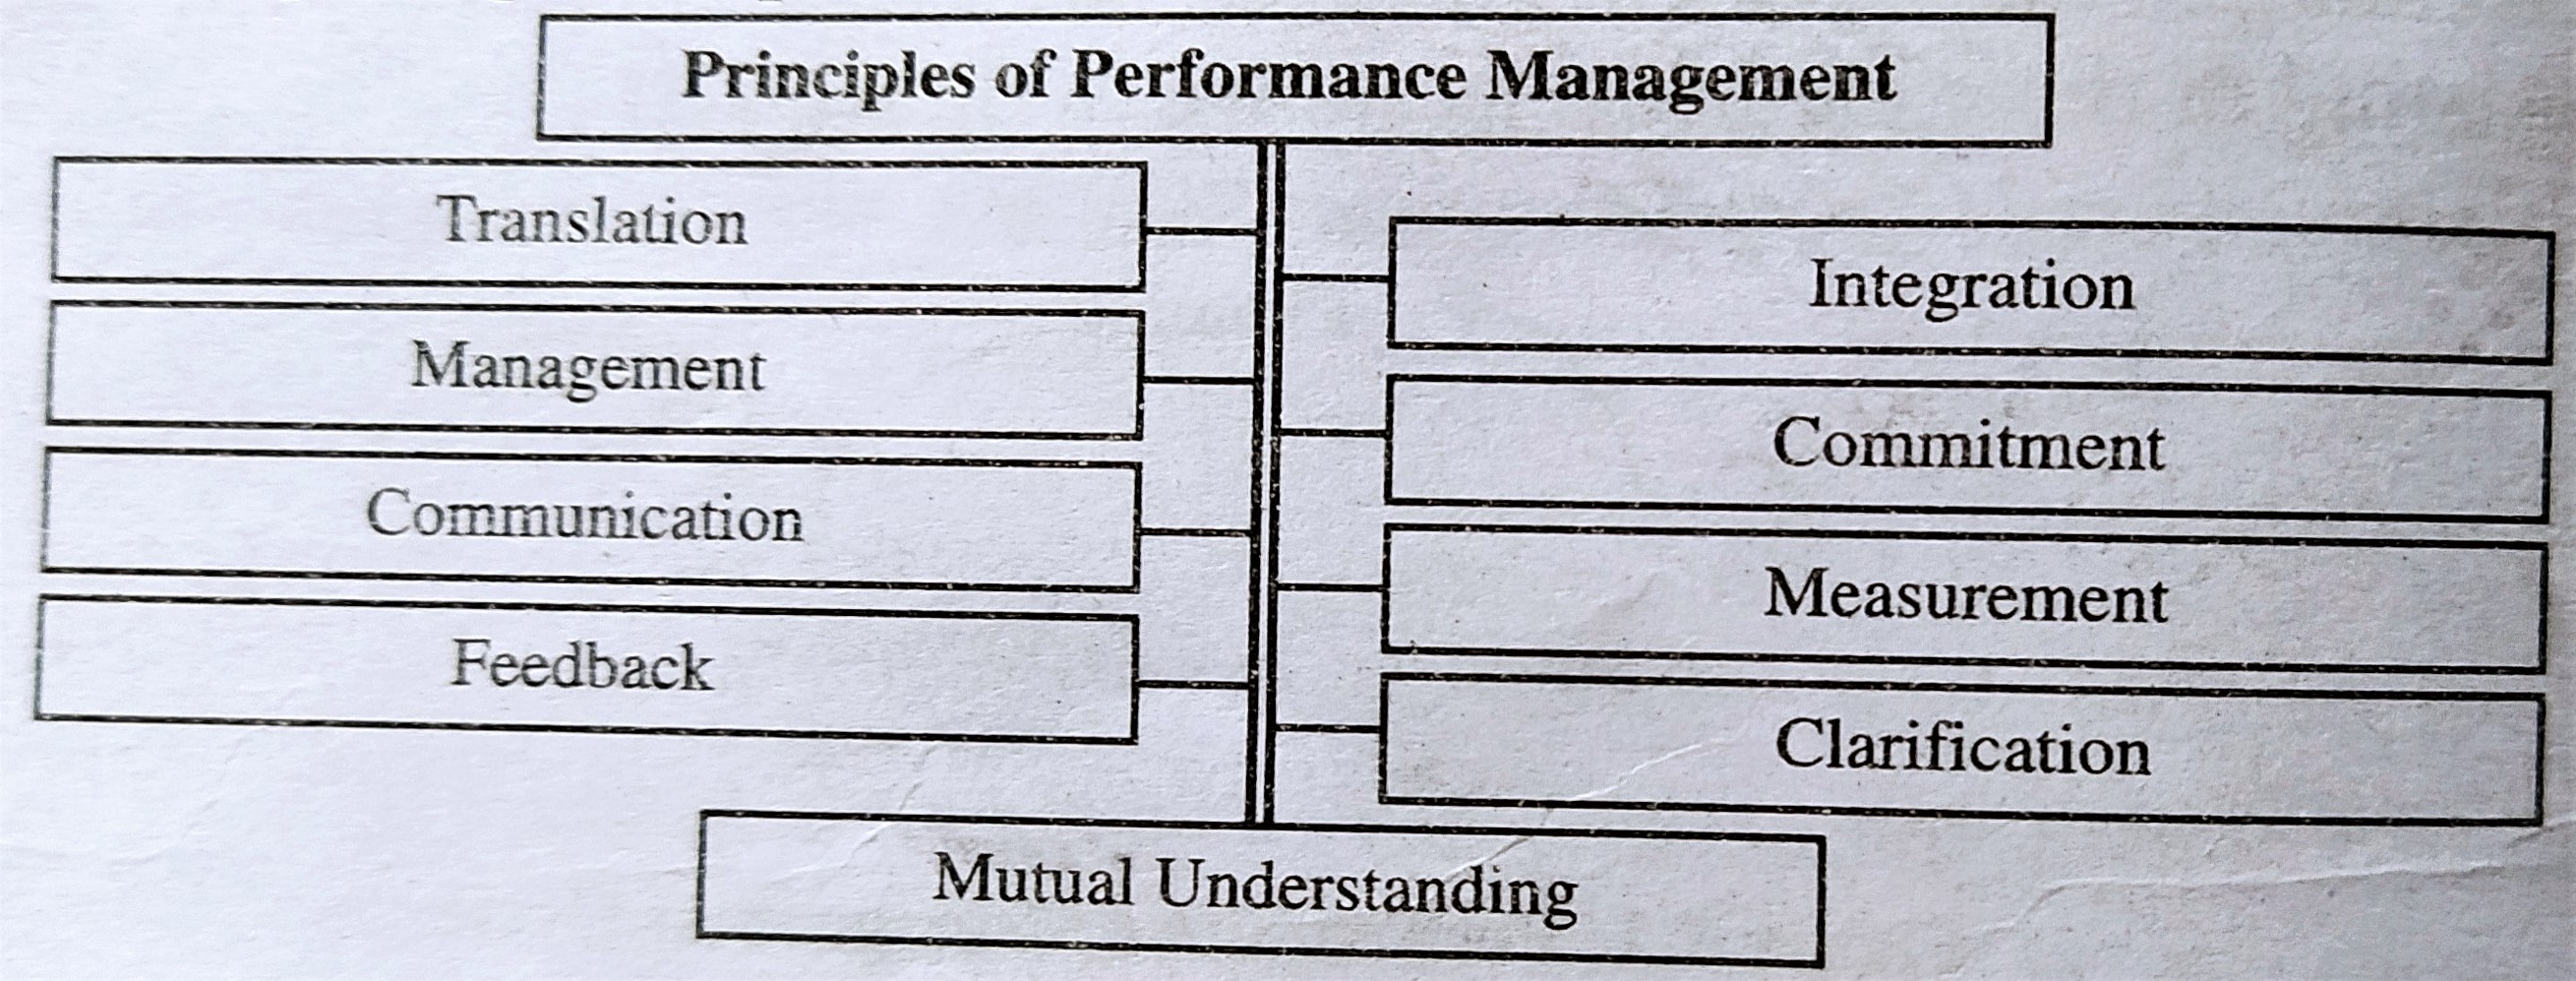 Principles of Performance Management